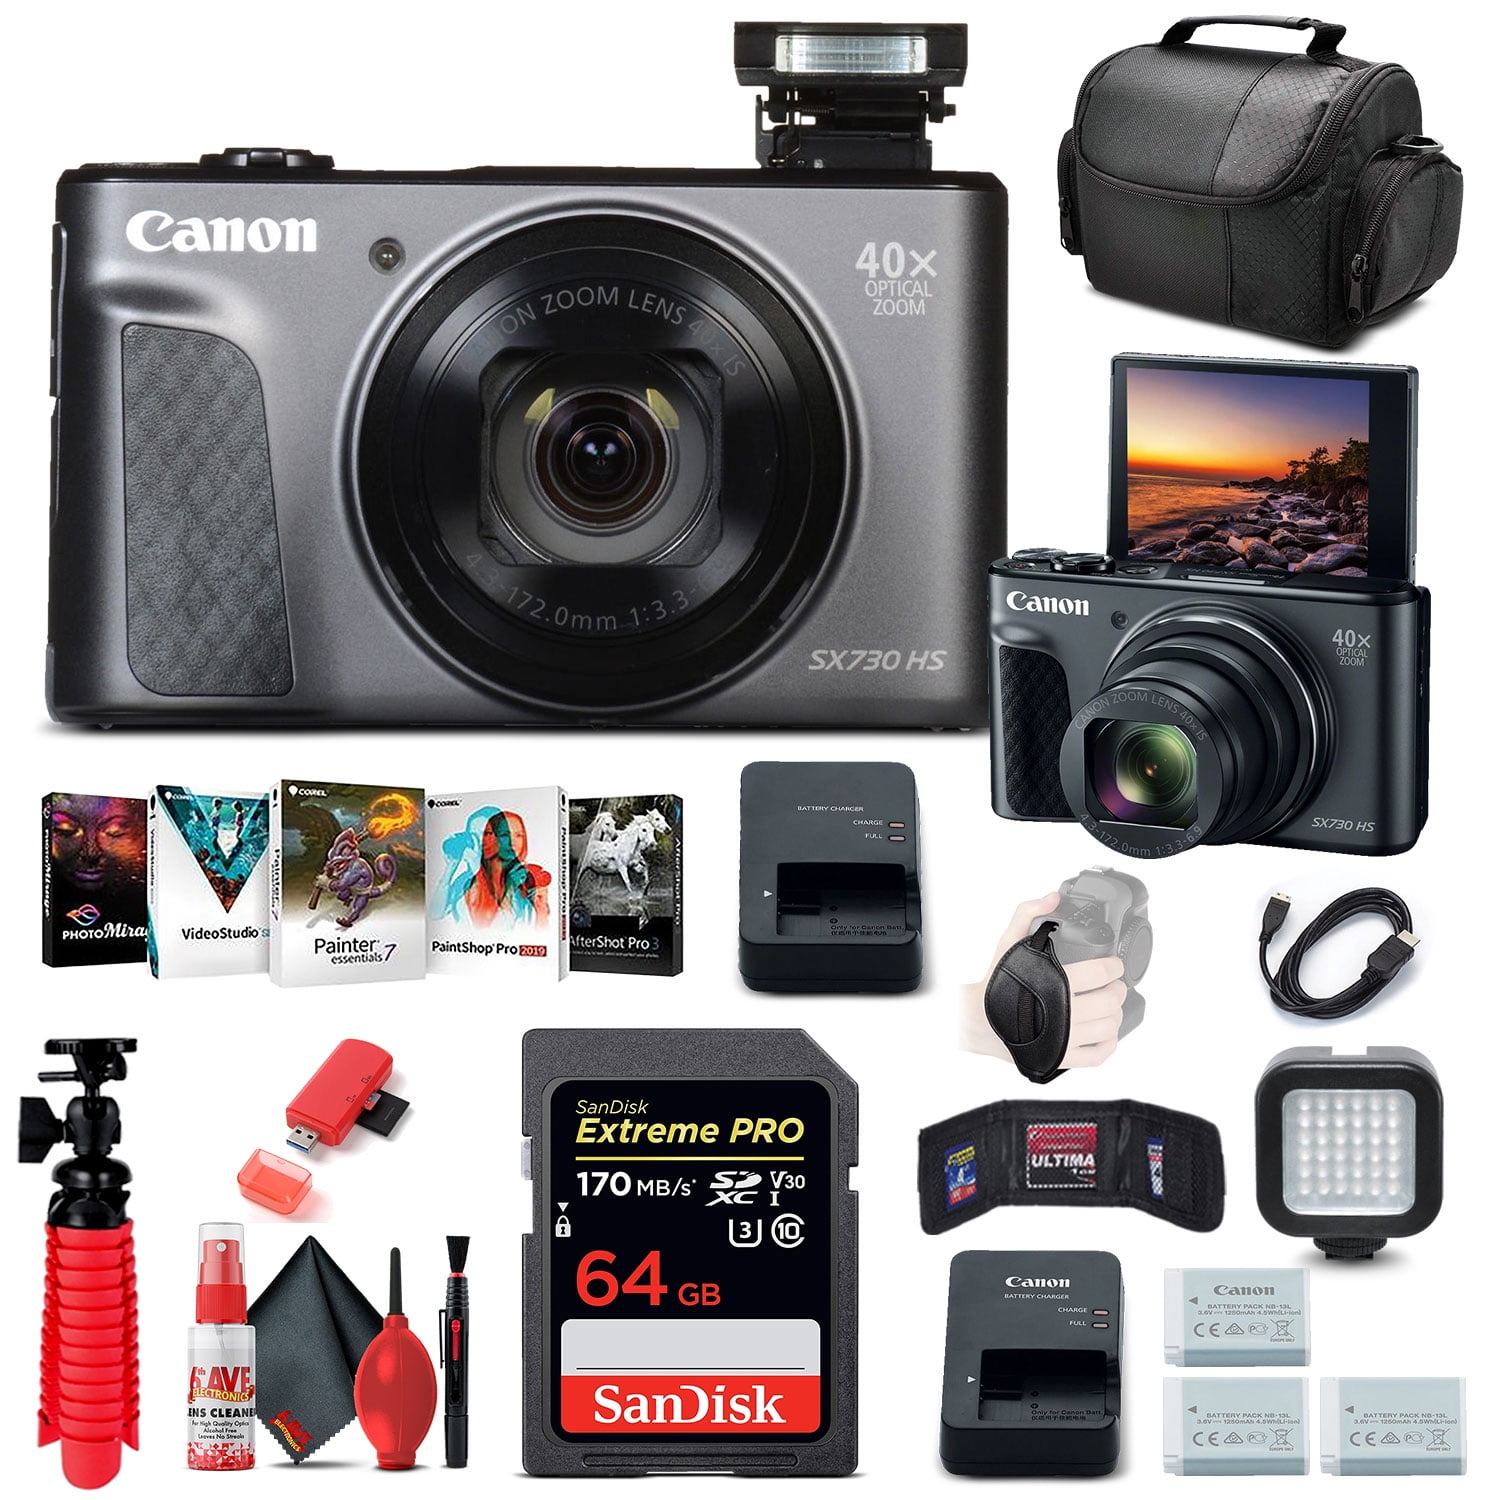 Canon PowerShot SX730 HS Digital Camera (Black) (1791C001) + 64GB